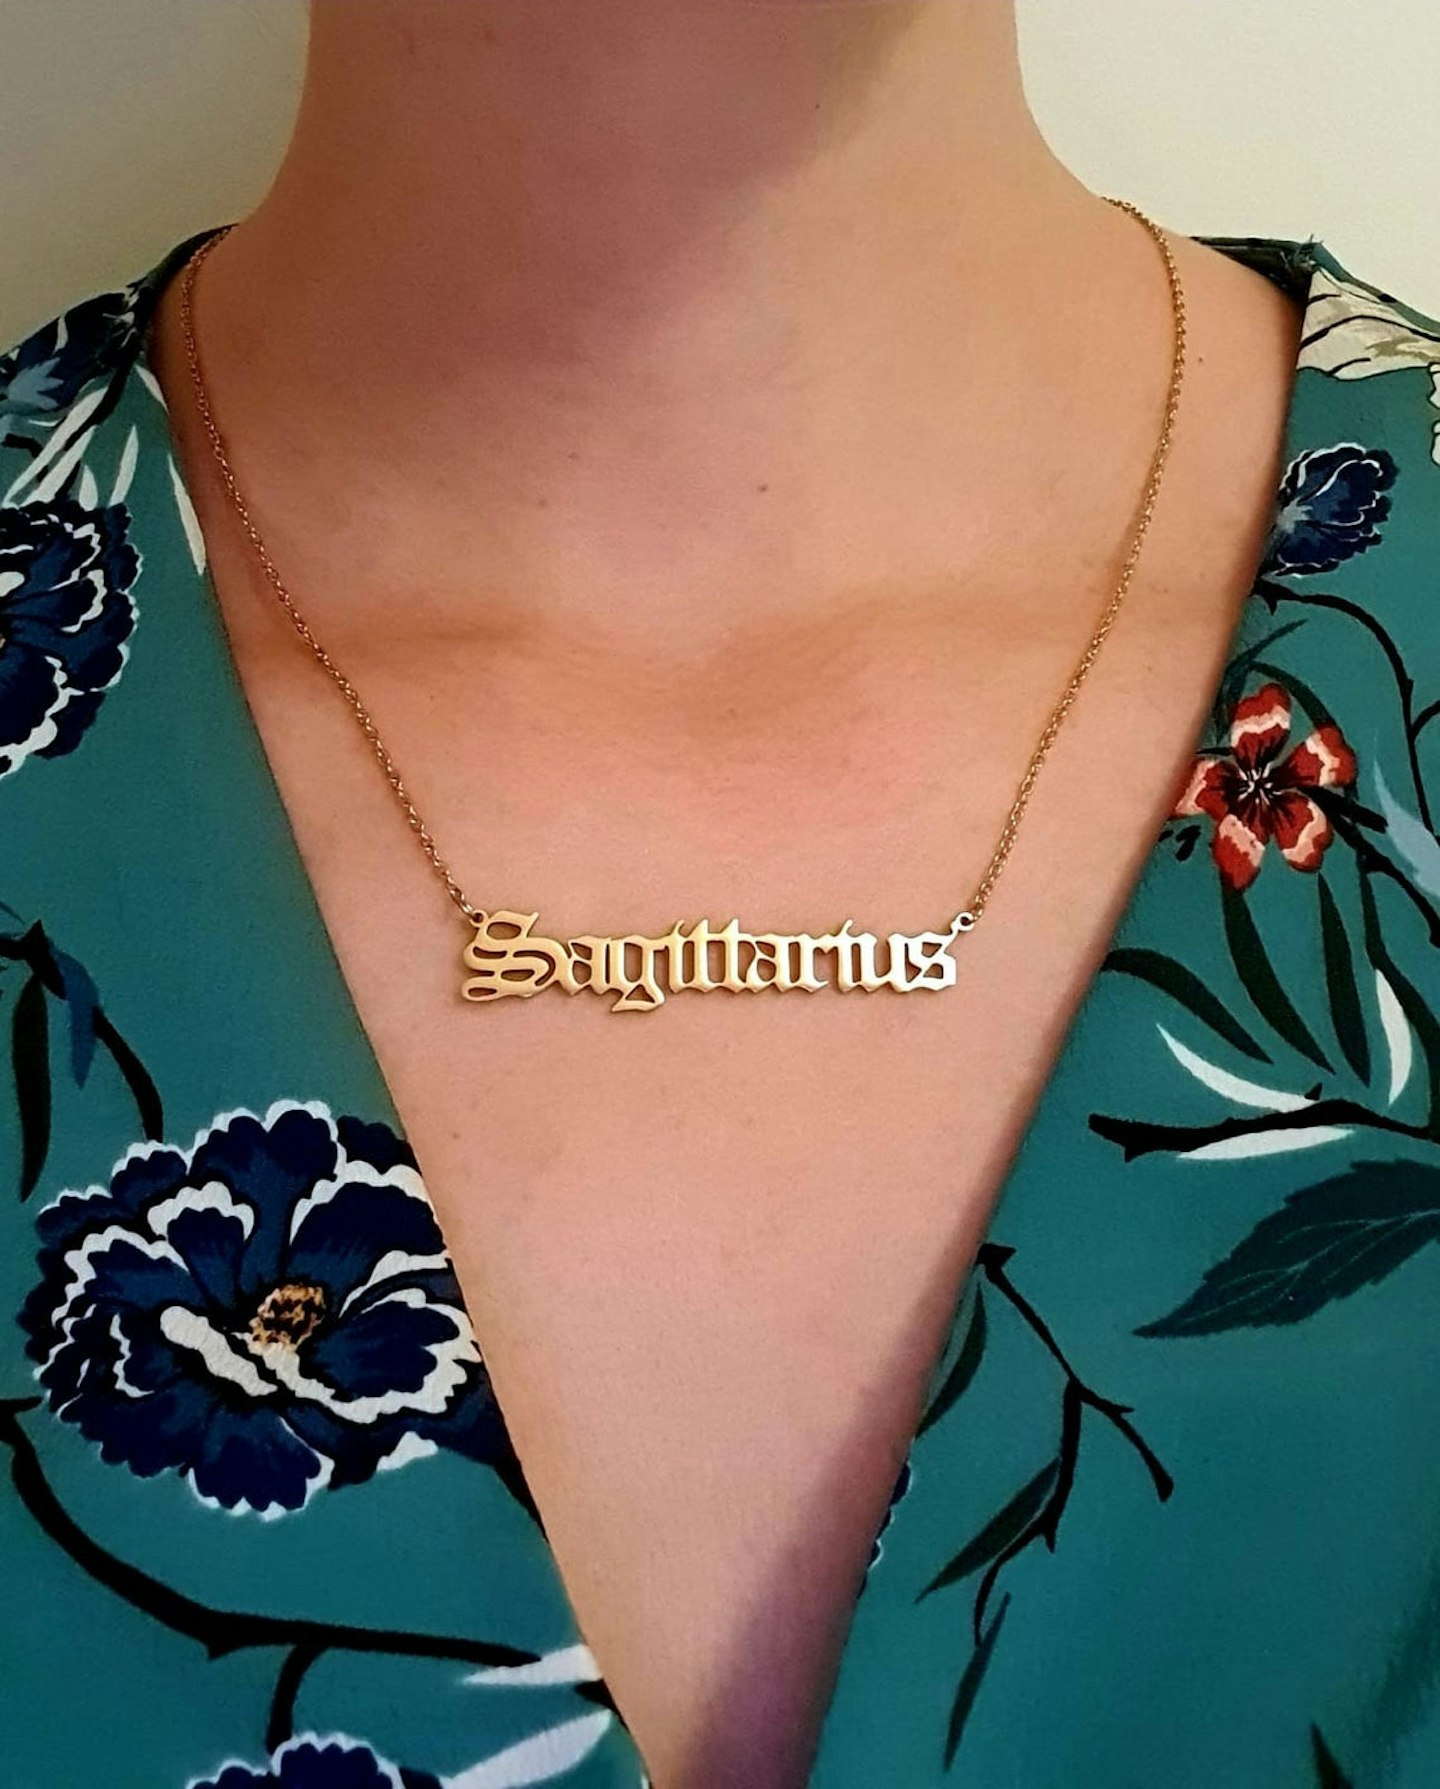 Sagittarius zodiac star sign necklace